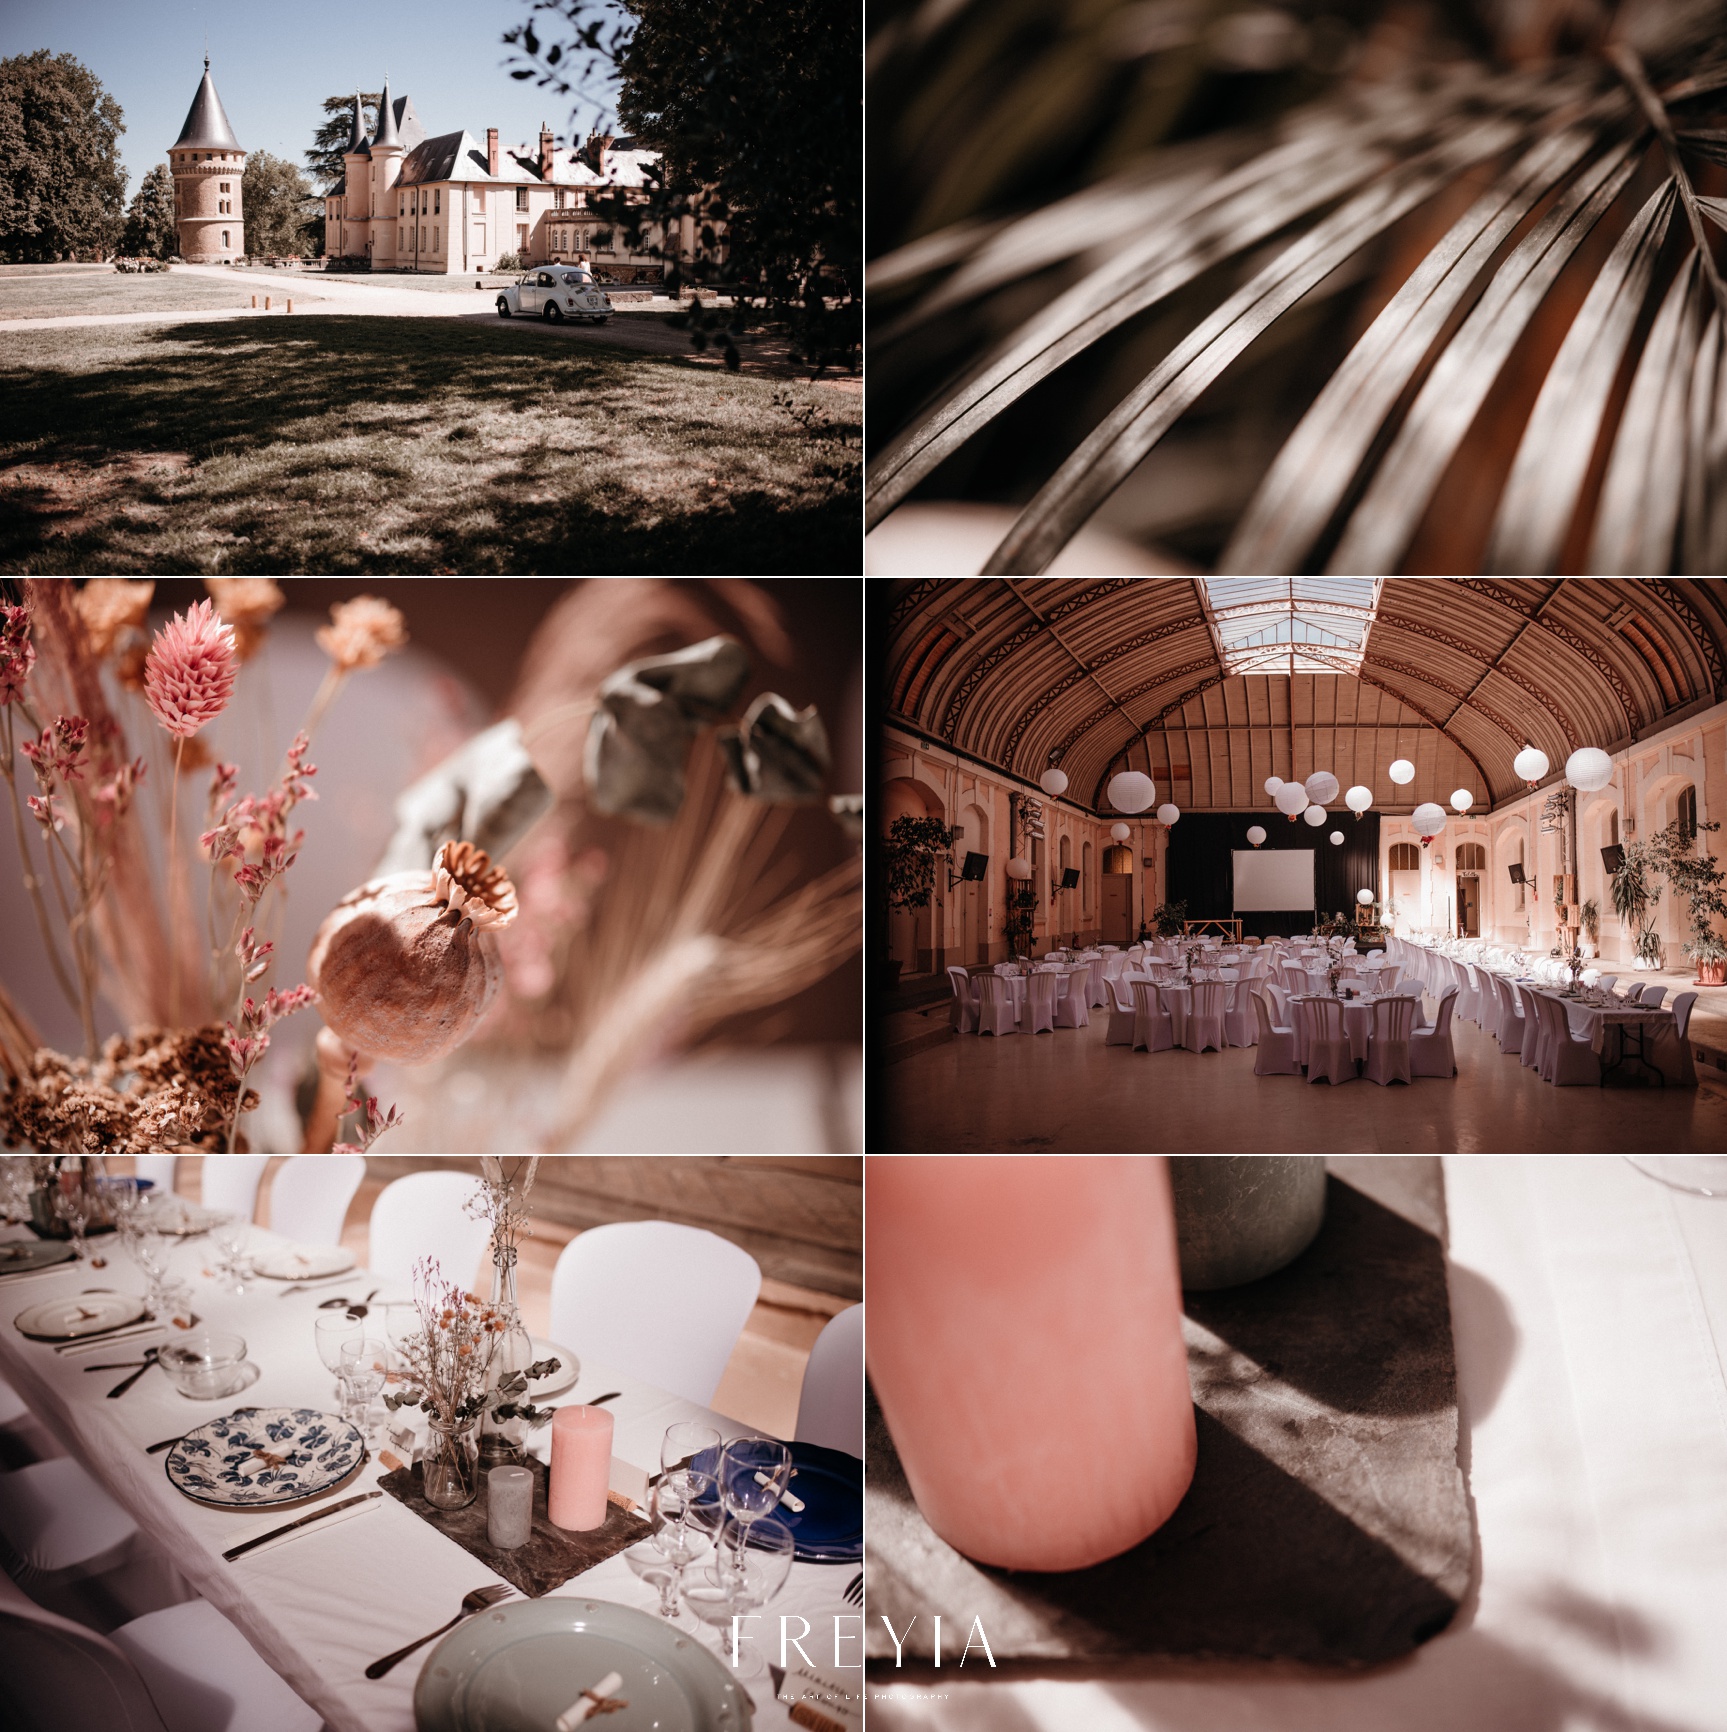 R + T |  mariage reportage alternatif moody intime minimaliste vintage naturel boho boheme |  PHOTOGRAPHE mariage PARIS france destination  | FREYIA photography_-1.jpg (Copy)